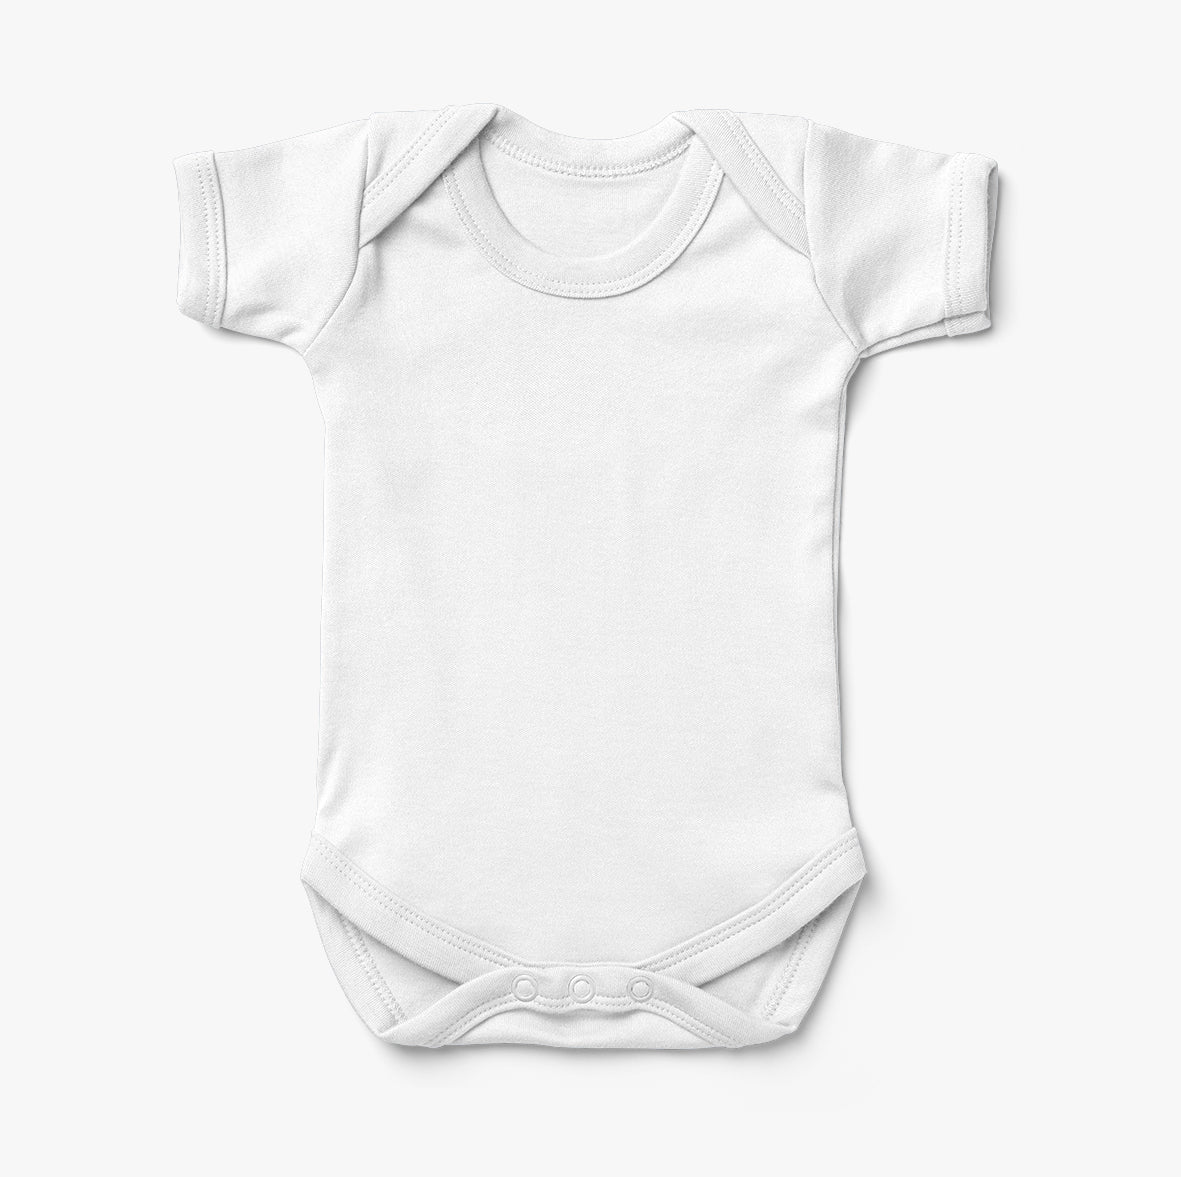 NO Designed Baby Bodysuits